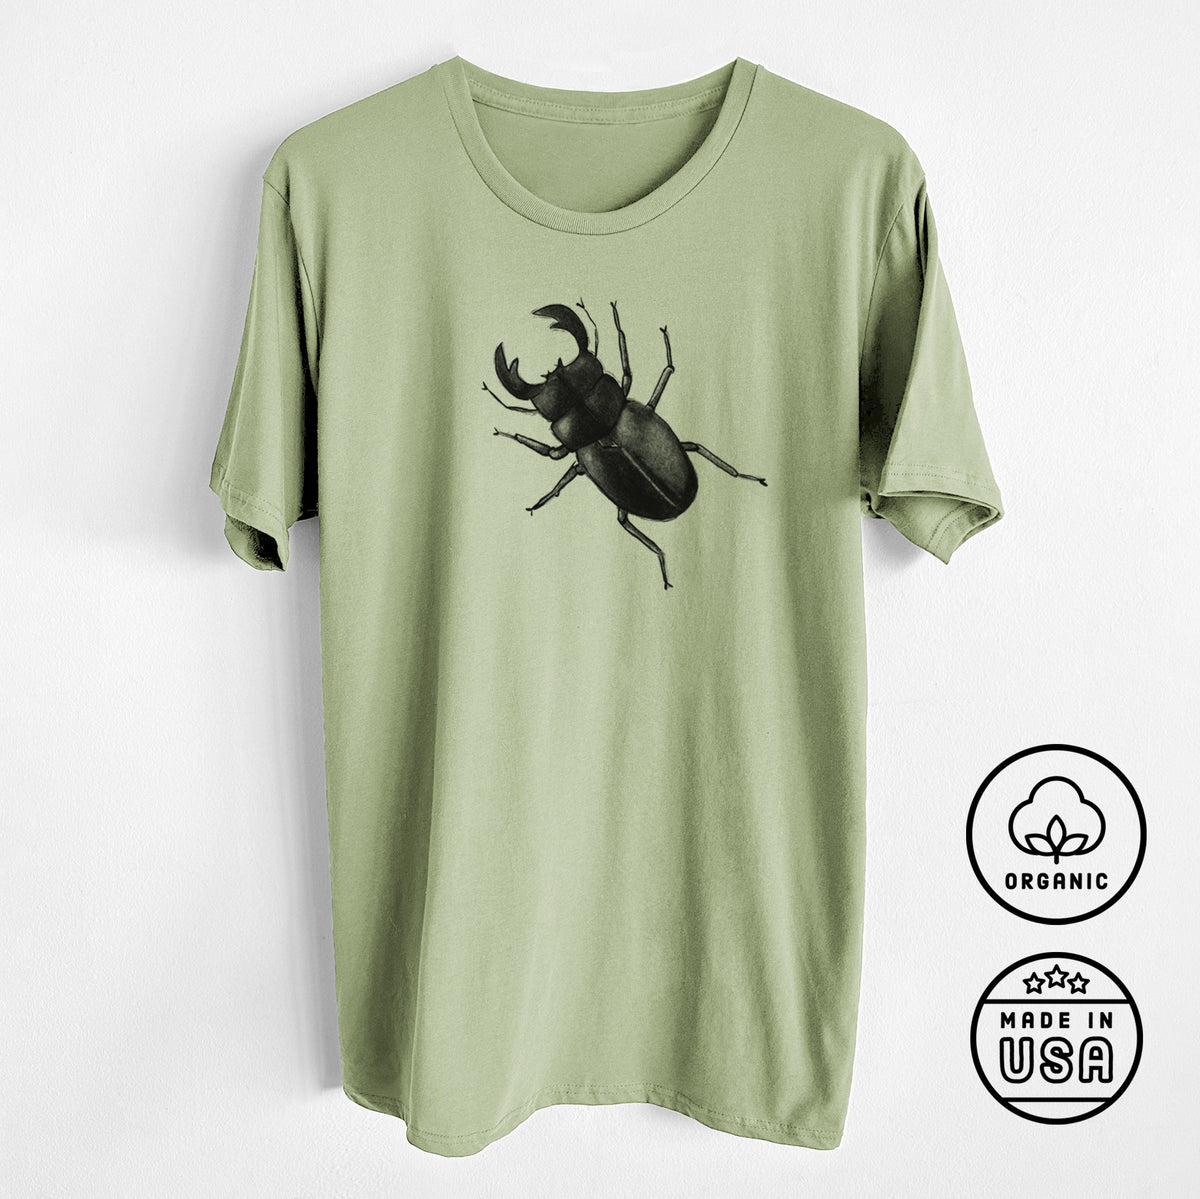 Dorcus titanus - Giant Stag Beetle - Unisex Crewneck - Made in USA - 100% Organic Cotton